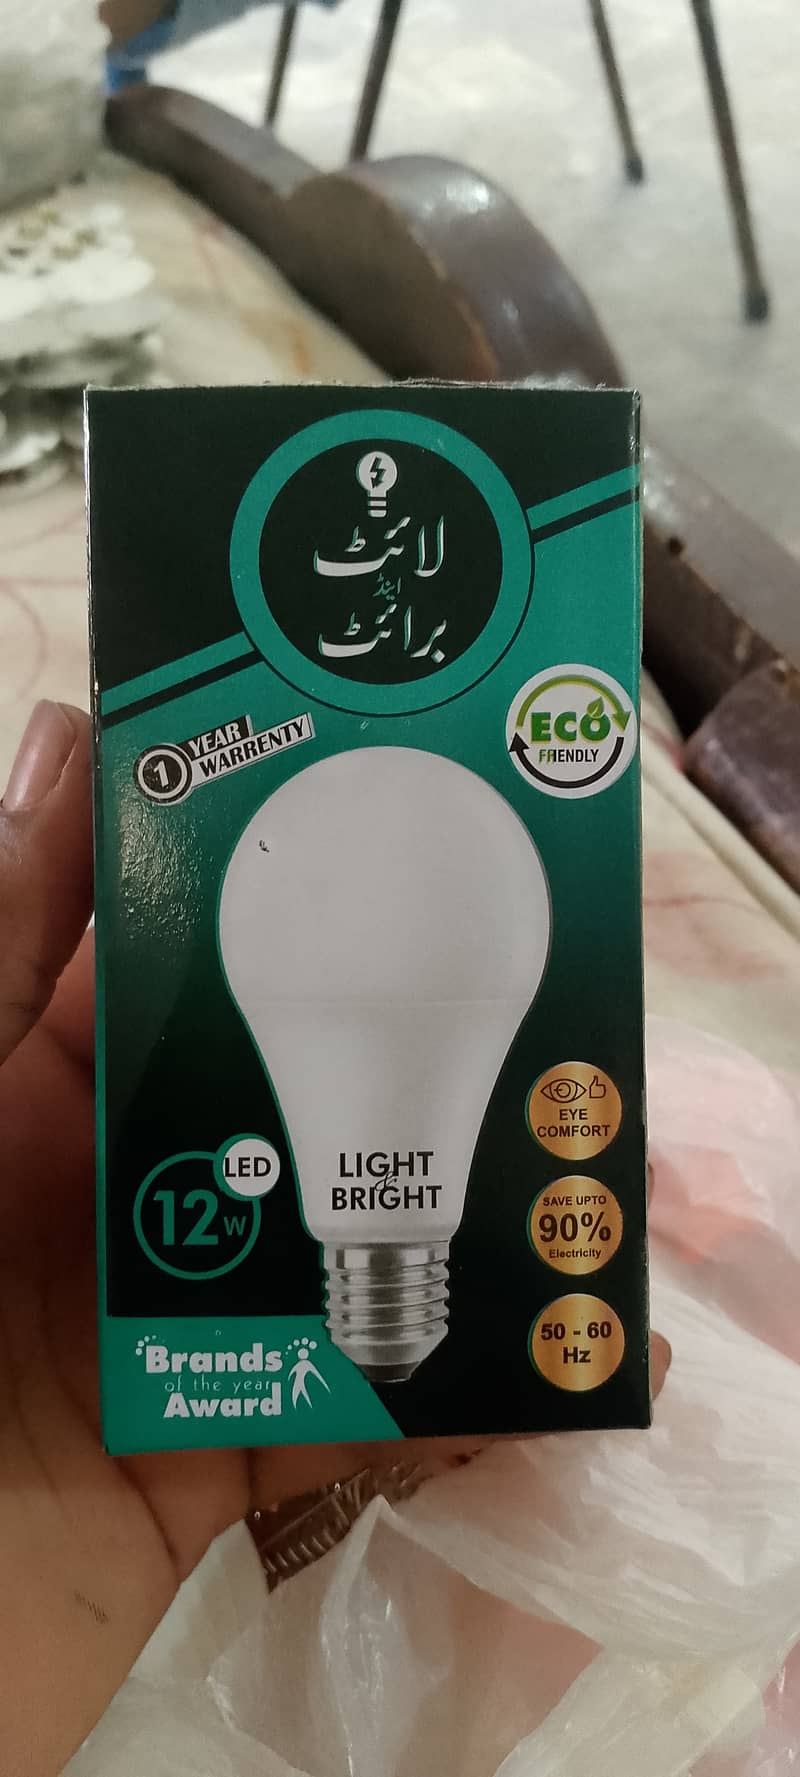 Light bright 1